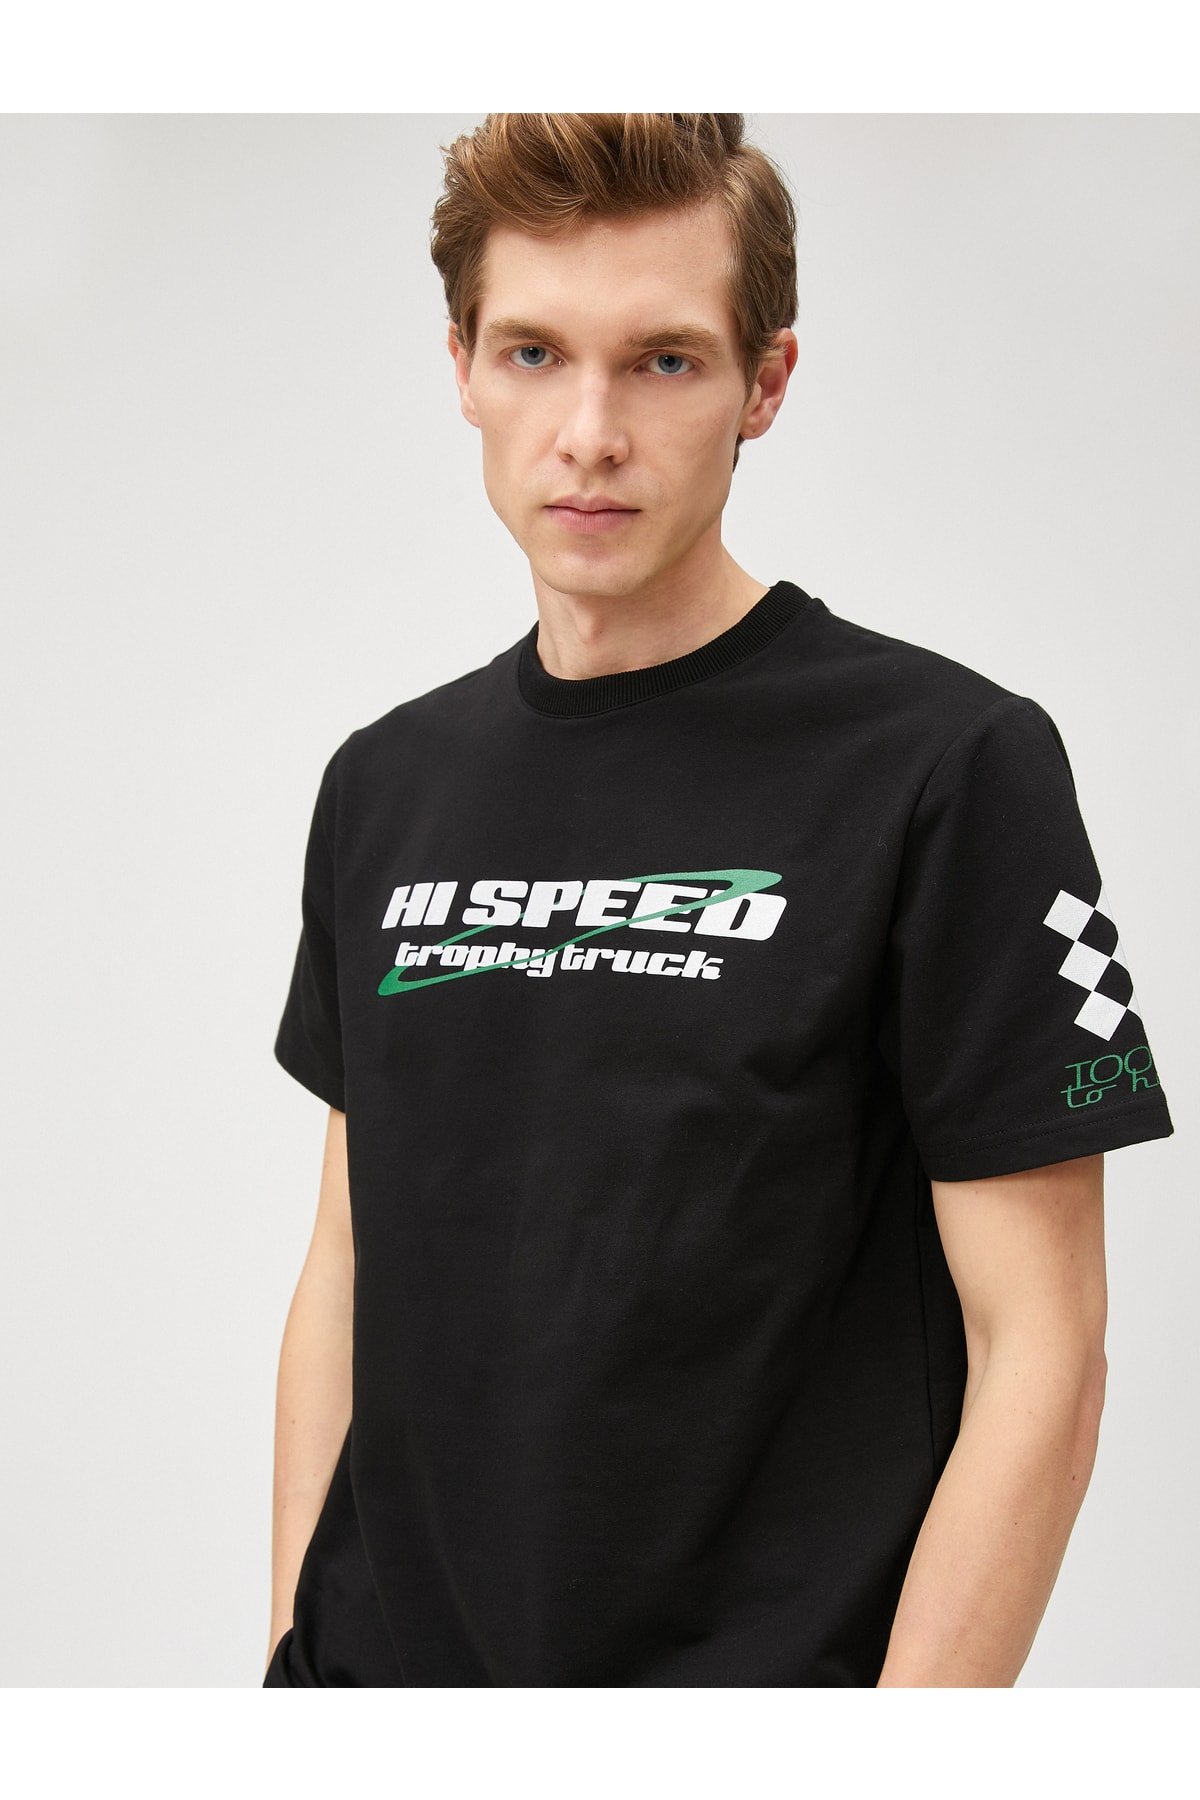 Koton Printed T-Shirt Racing Theme Crew Neck Short Sleeve Cotton